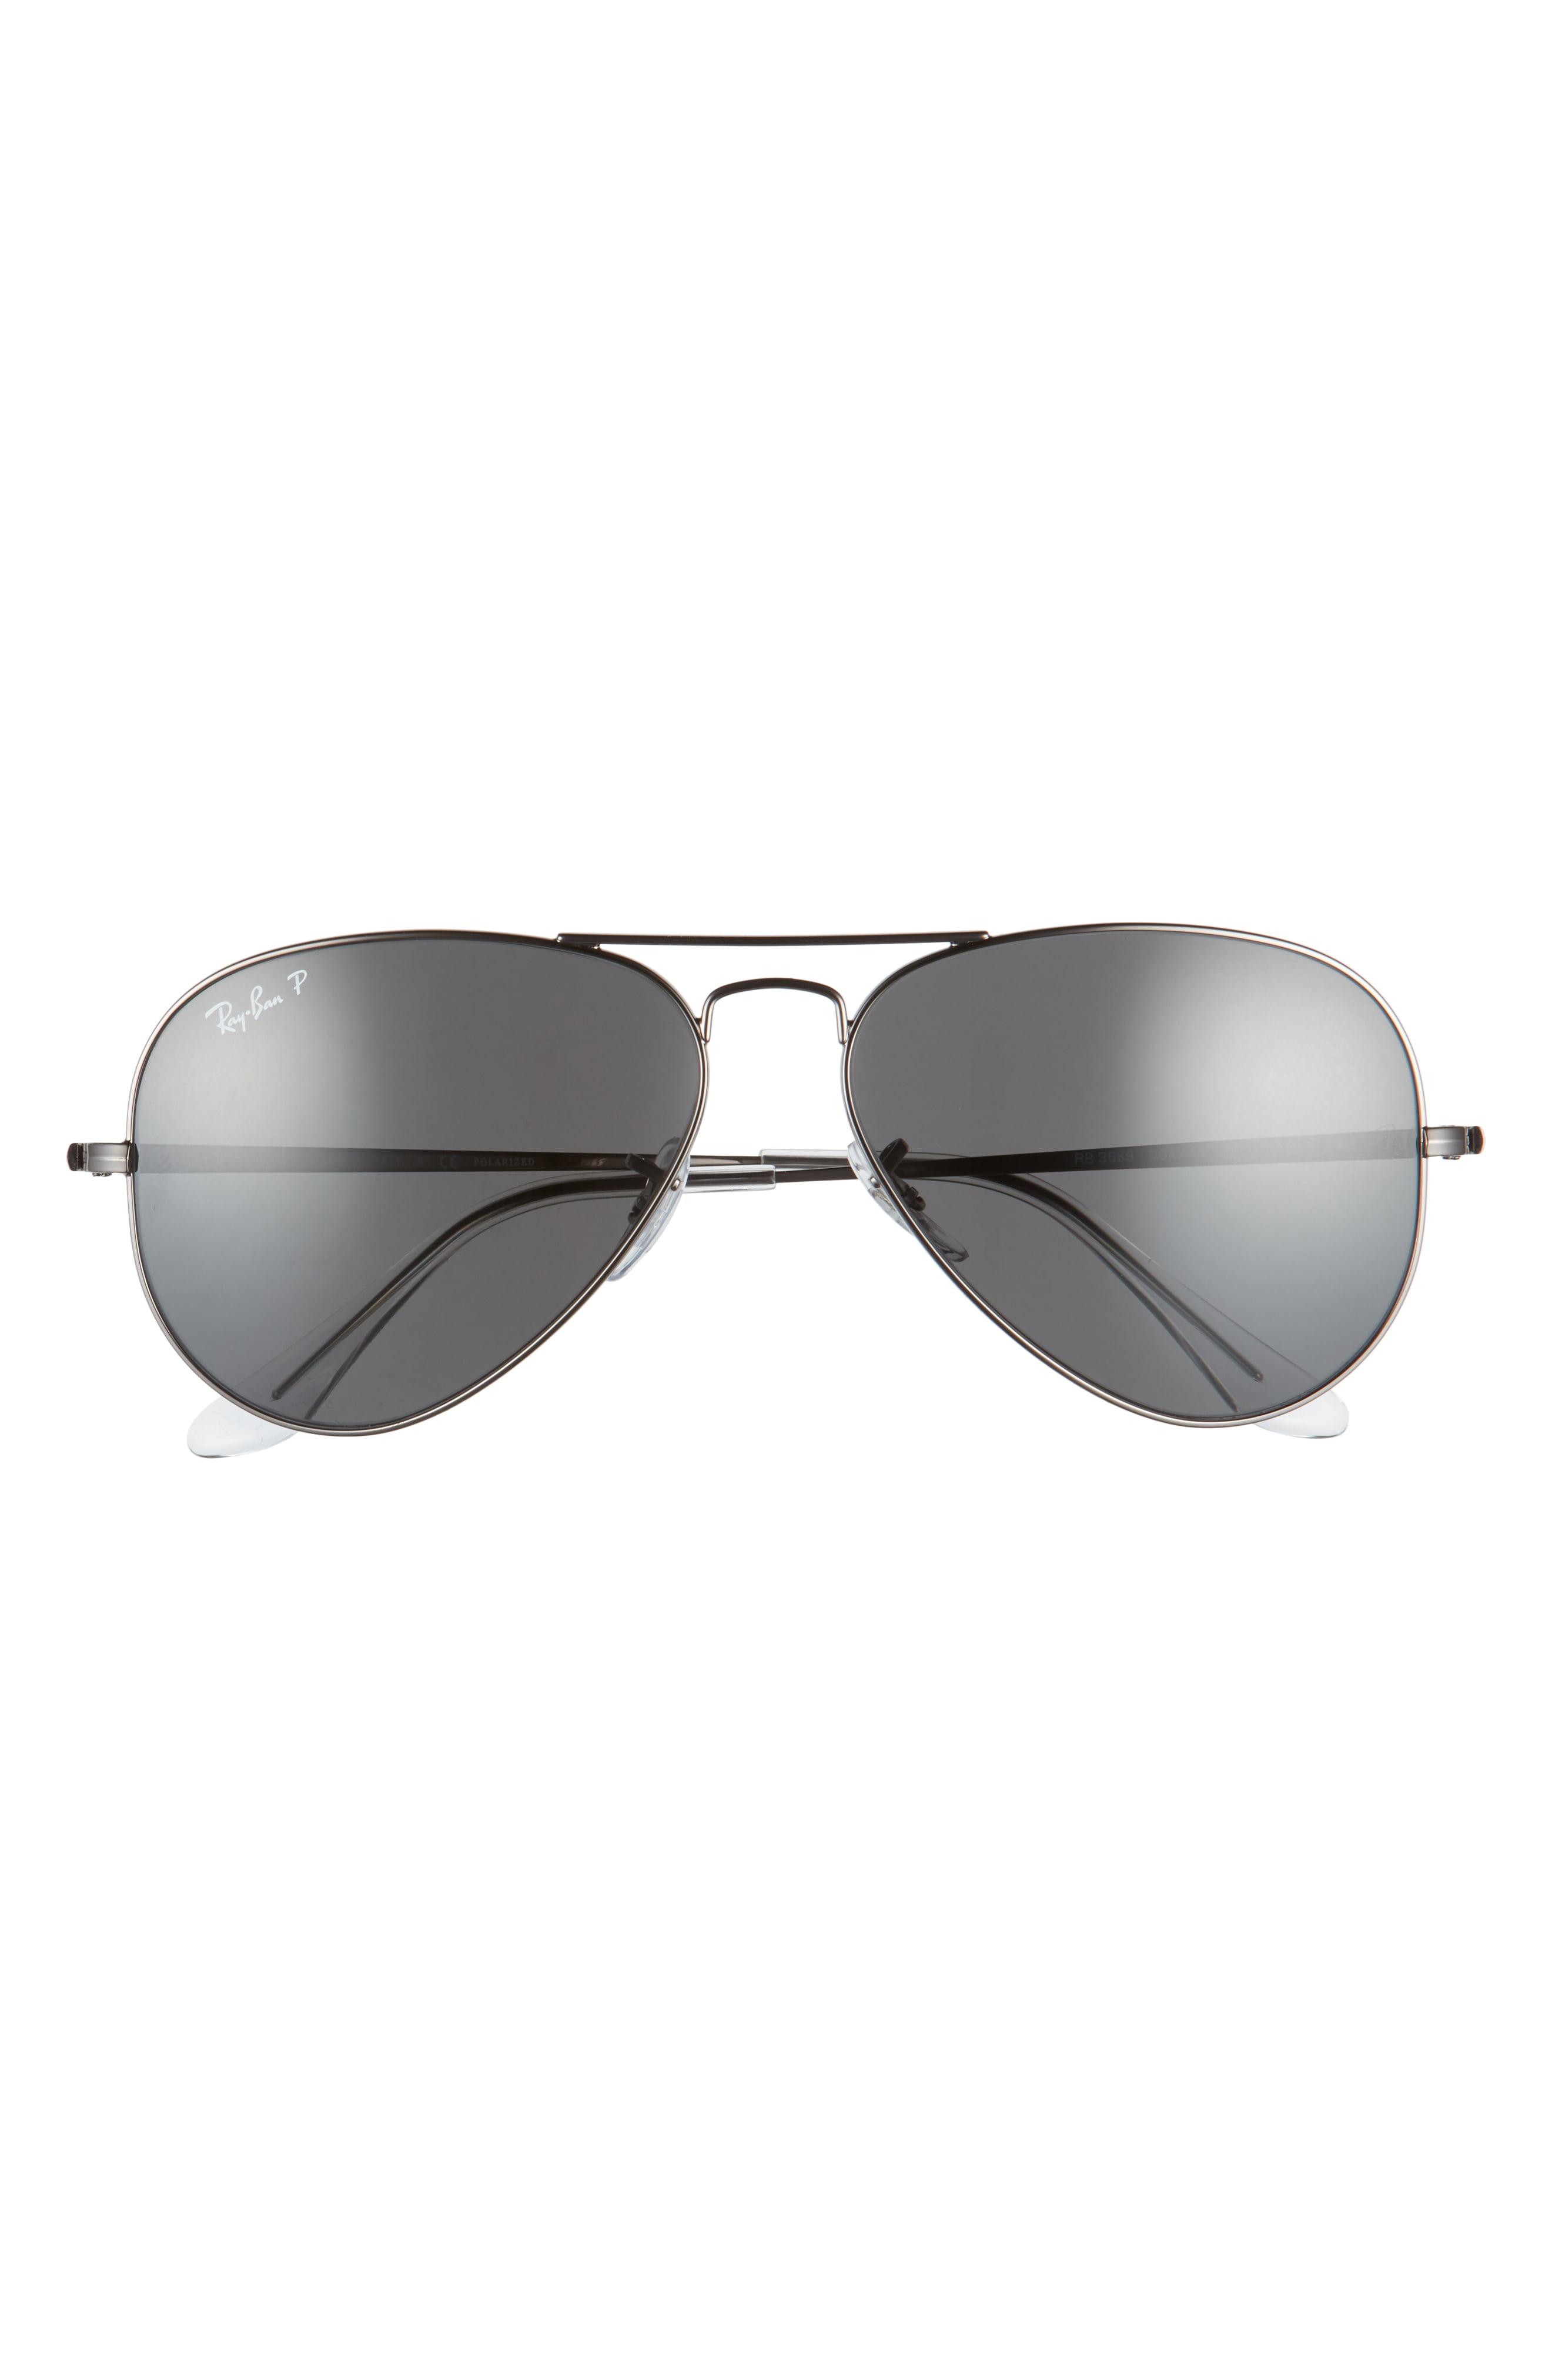 Ray-Ban 58mm Polarized Photochromic Aviator Sunglasses - Gunmetal ...